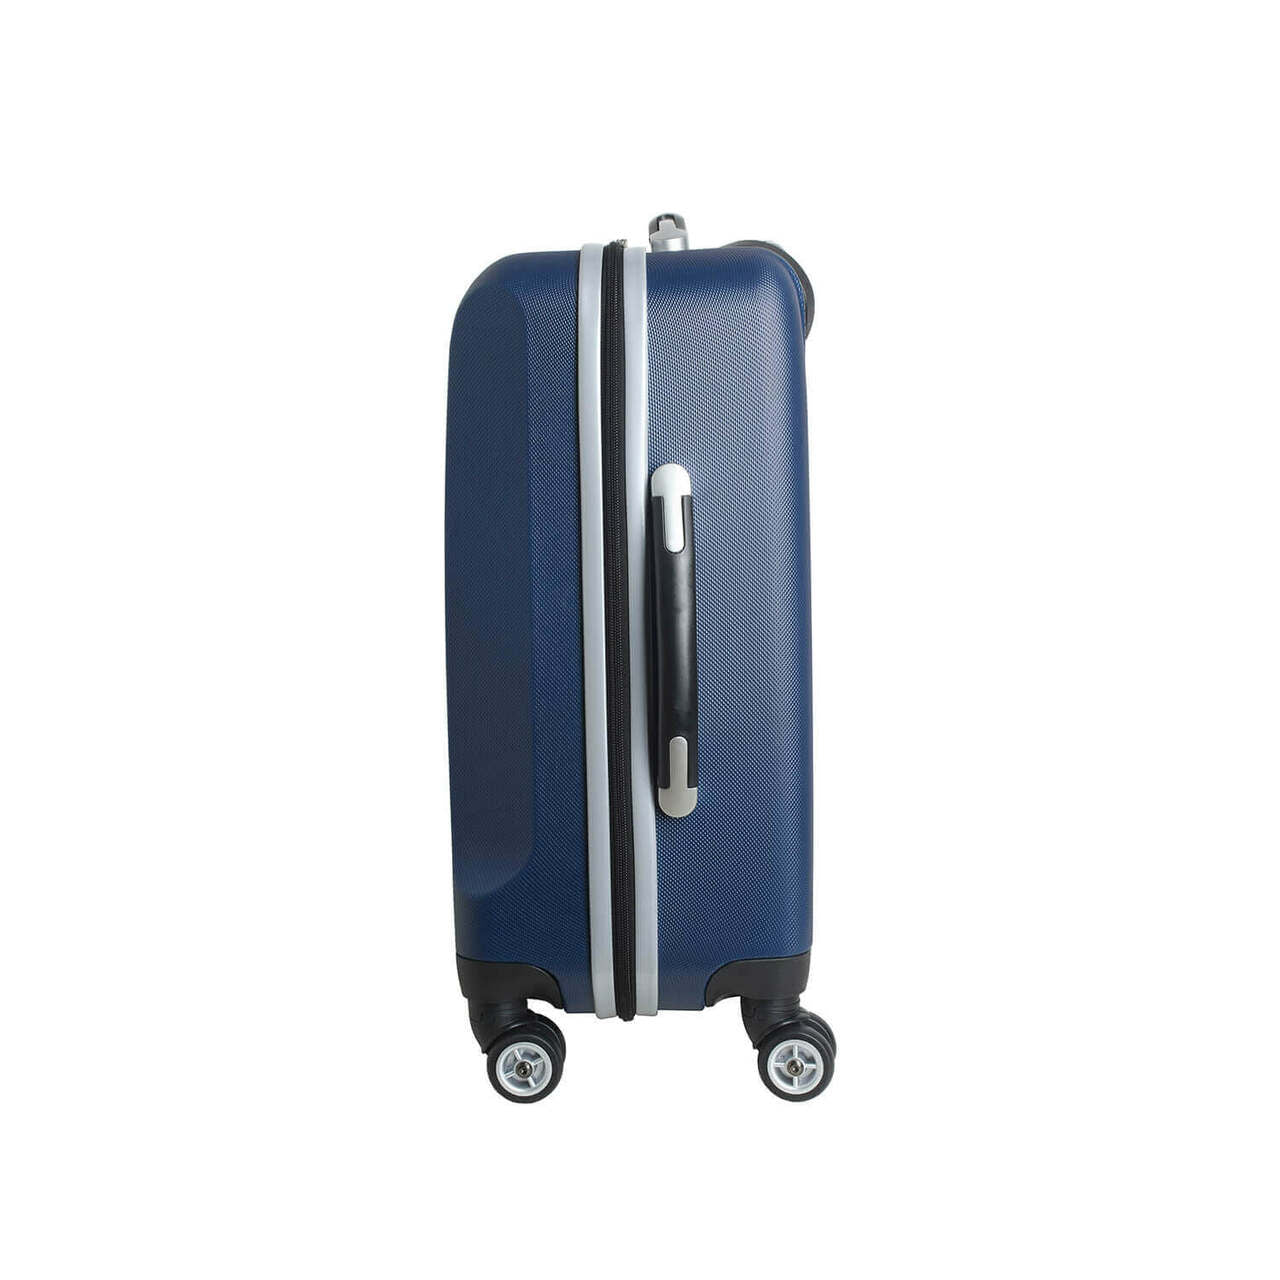 Team USA Olympics 20" Hardcase Luggage Carry-on Spinner